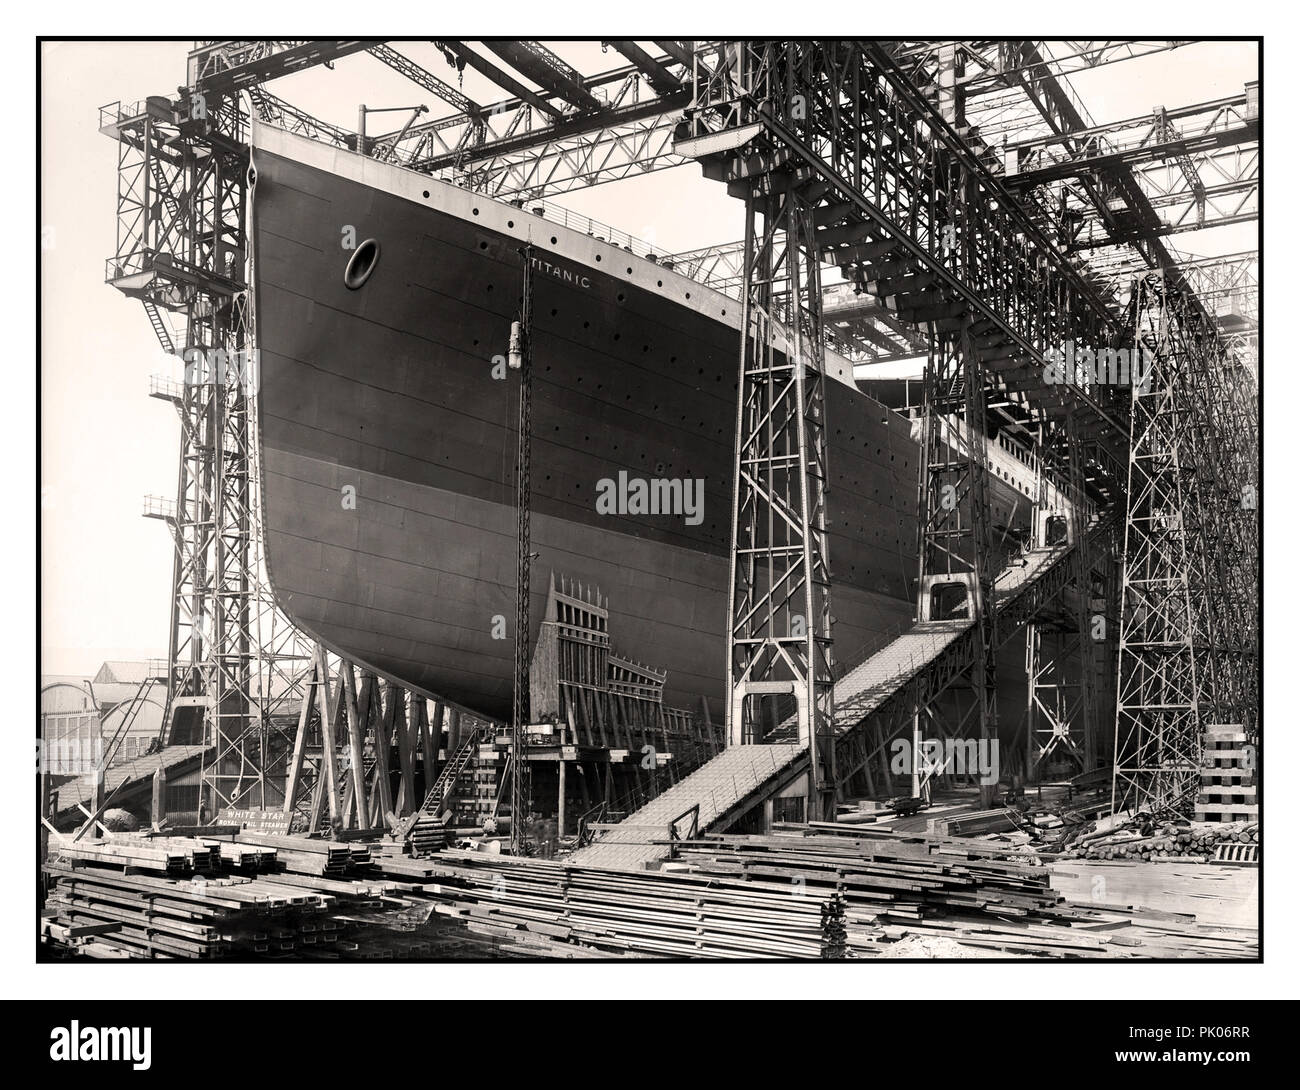 TITANIC SLIPWAY 1912 RMS Titanic on slipway in Harland & Wolff shipyards undergoing final construction & preparations prior to launch Stock Photo